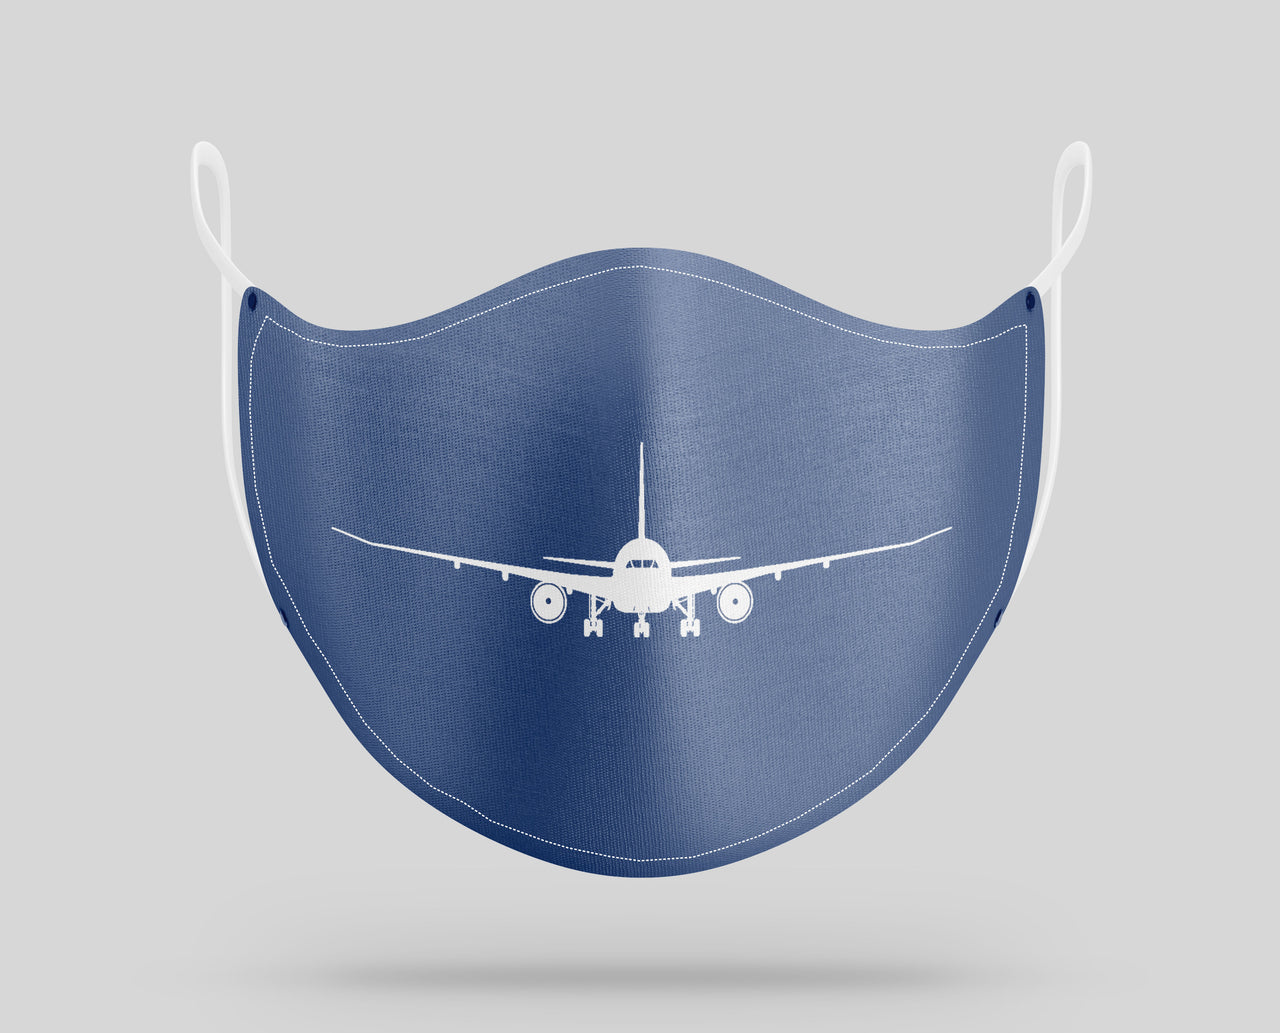 Boeing 787 Silhouette Designed Face Masks